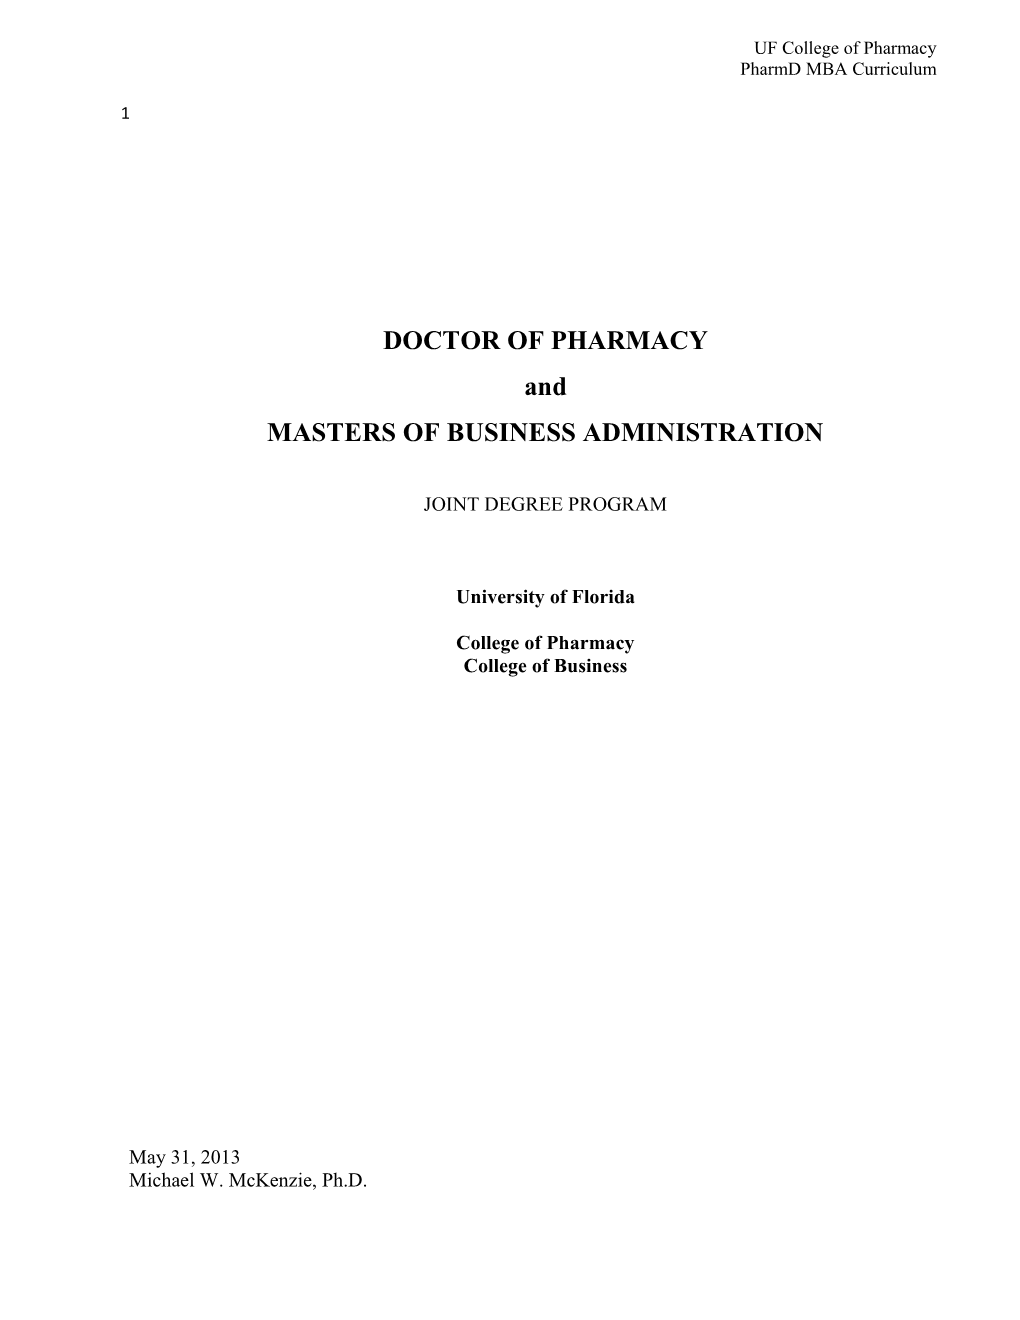 Doctor of Pharmacy